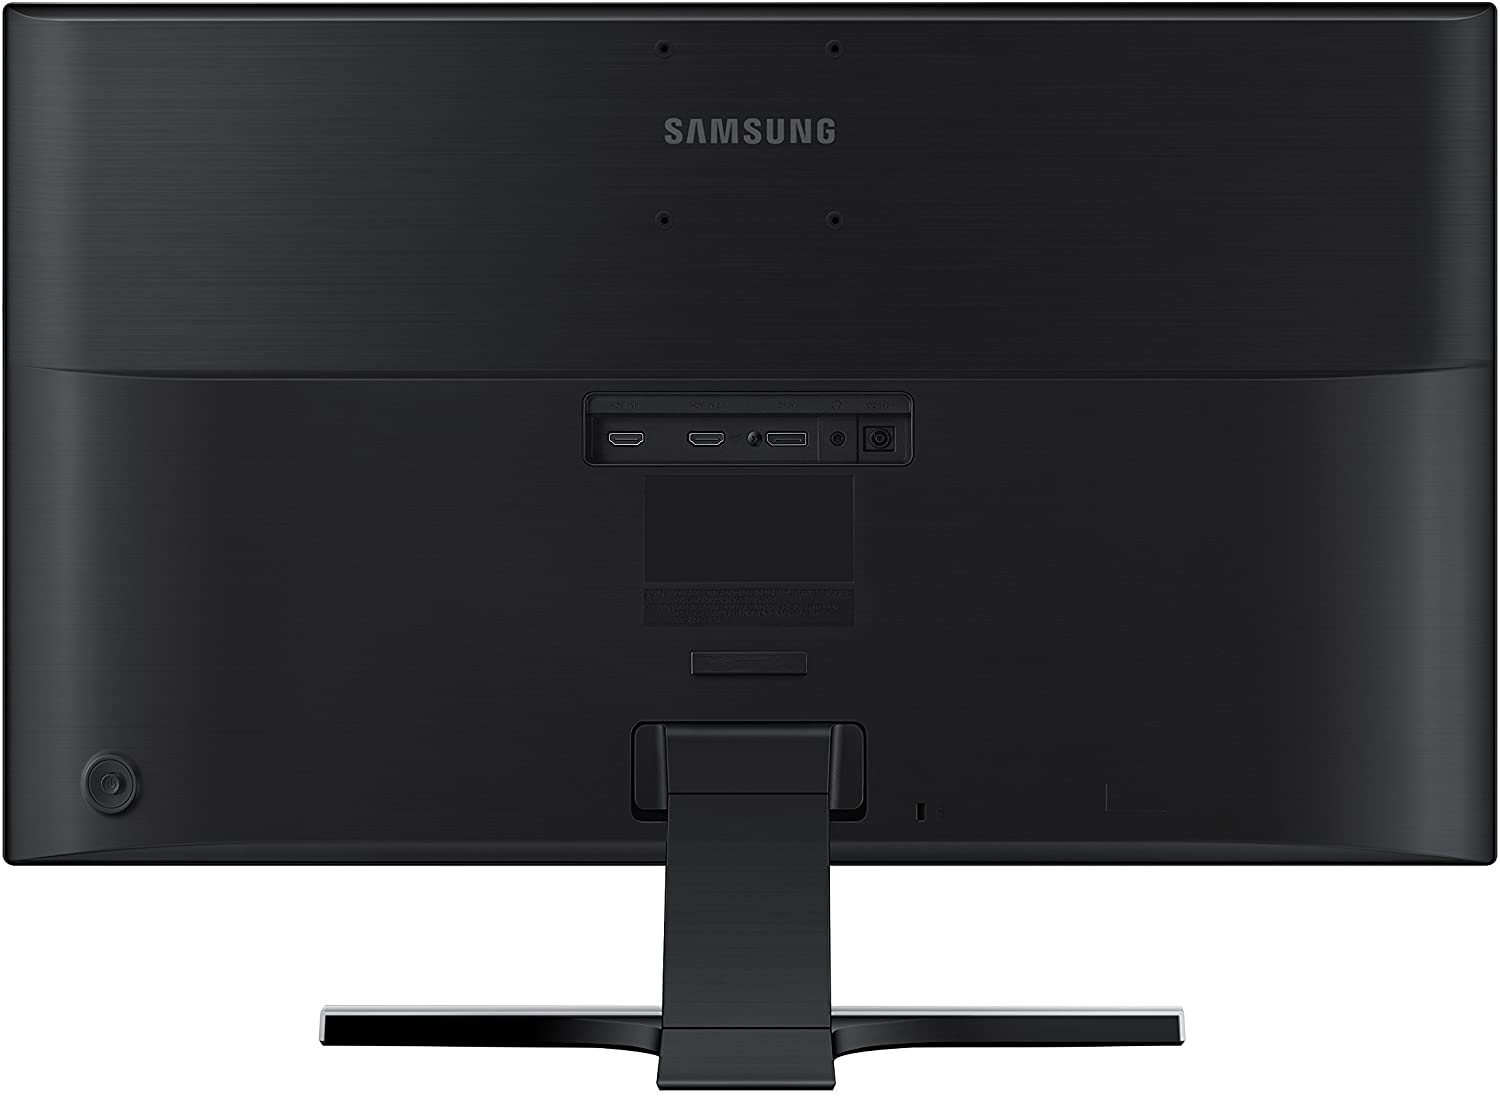 Samsung LU28E590DS/ZA-RB 28" UE590 Series UHD Monitor - Certified Refurbished